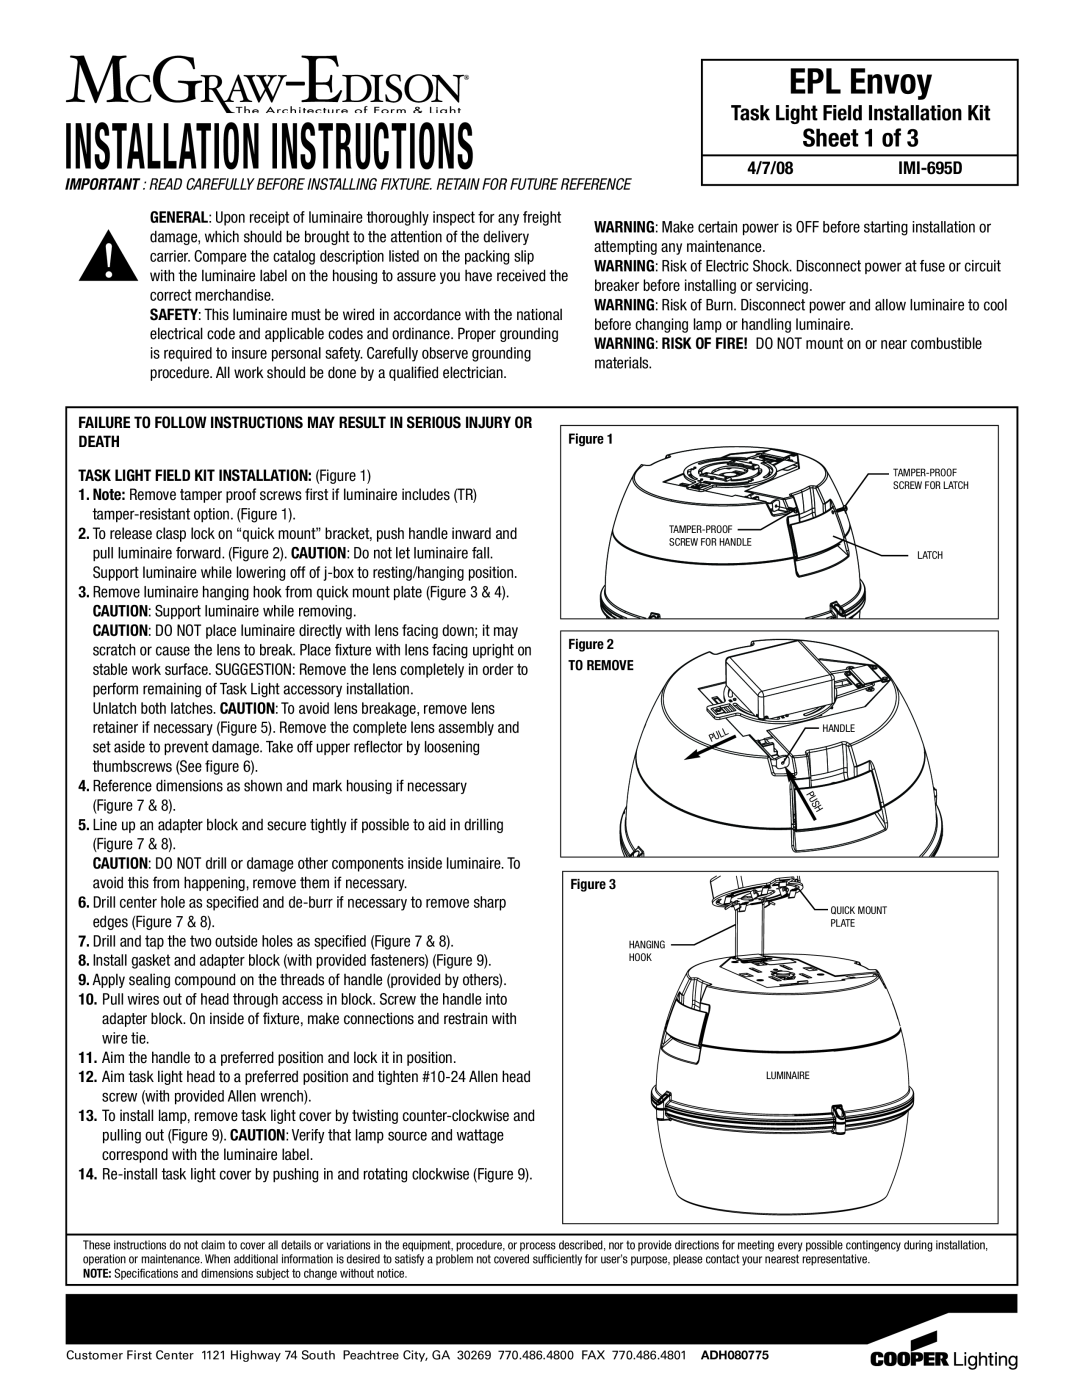 Cooper Lighting IMI-6950 dimensions Installation Instructions, EPL Envoy, Sheet 1 of, Task Light Field Installation Kit 